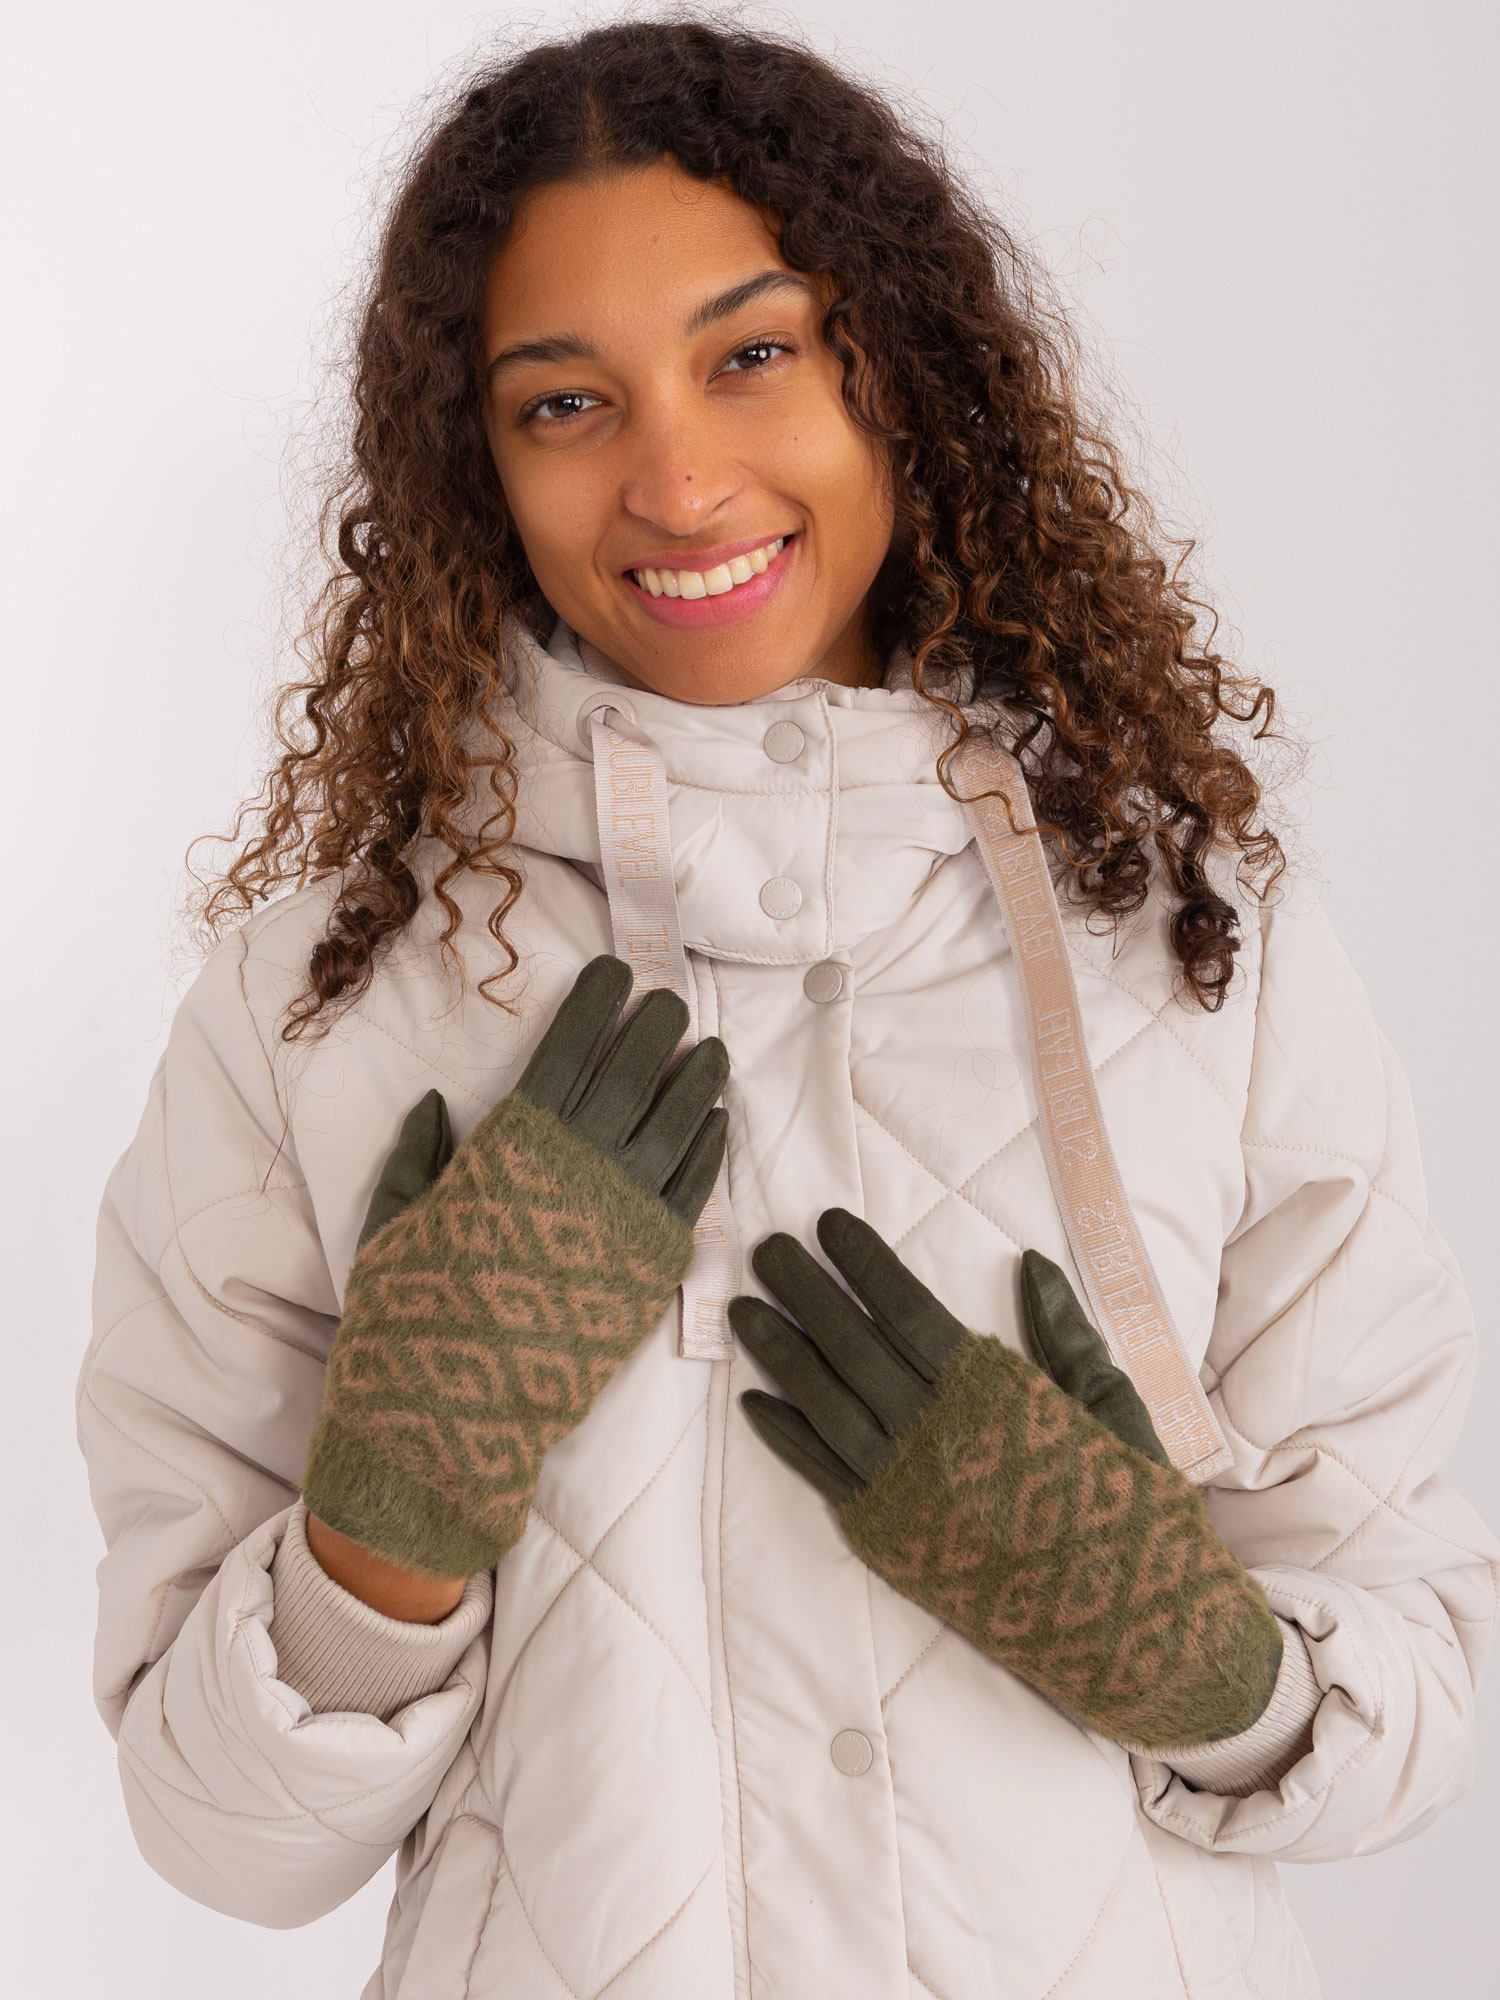 Tmavé khaki vzorované rukavice AT-RK-2310.89-khaki Velikost: S/M